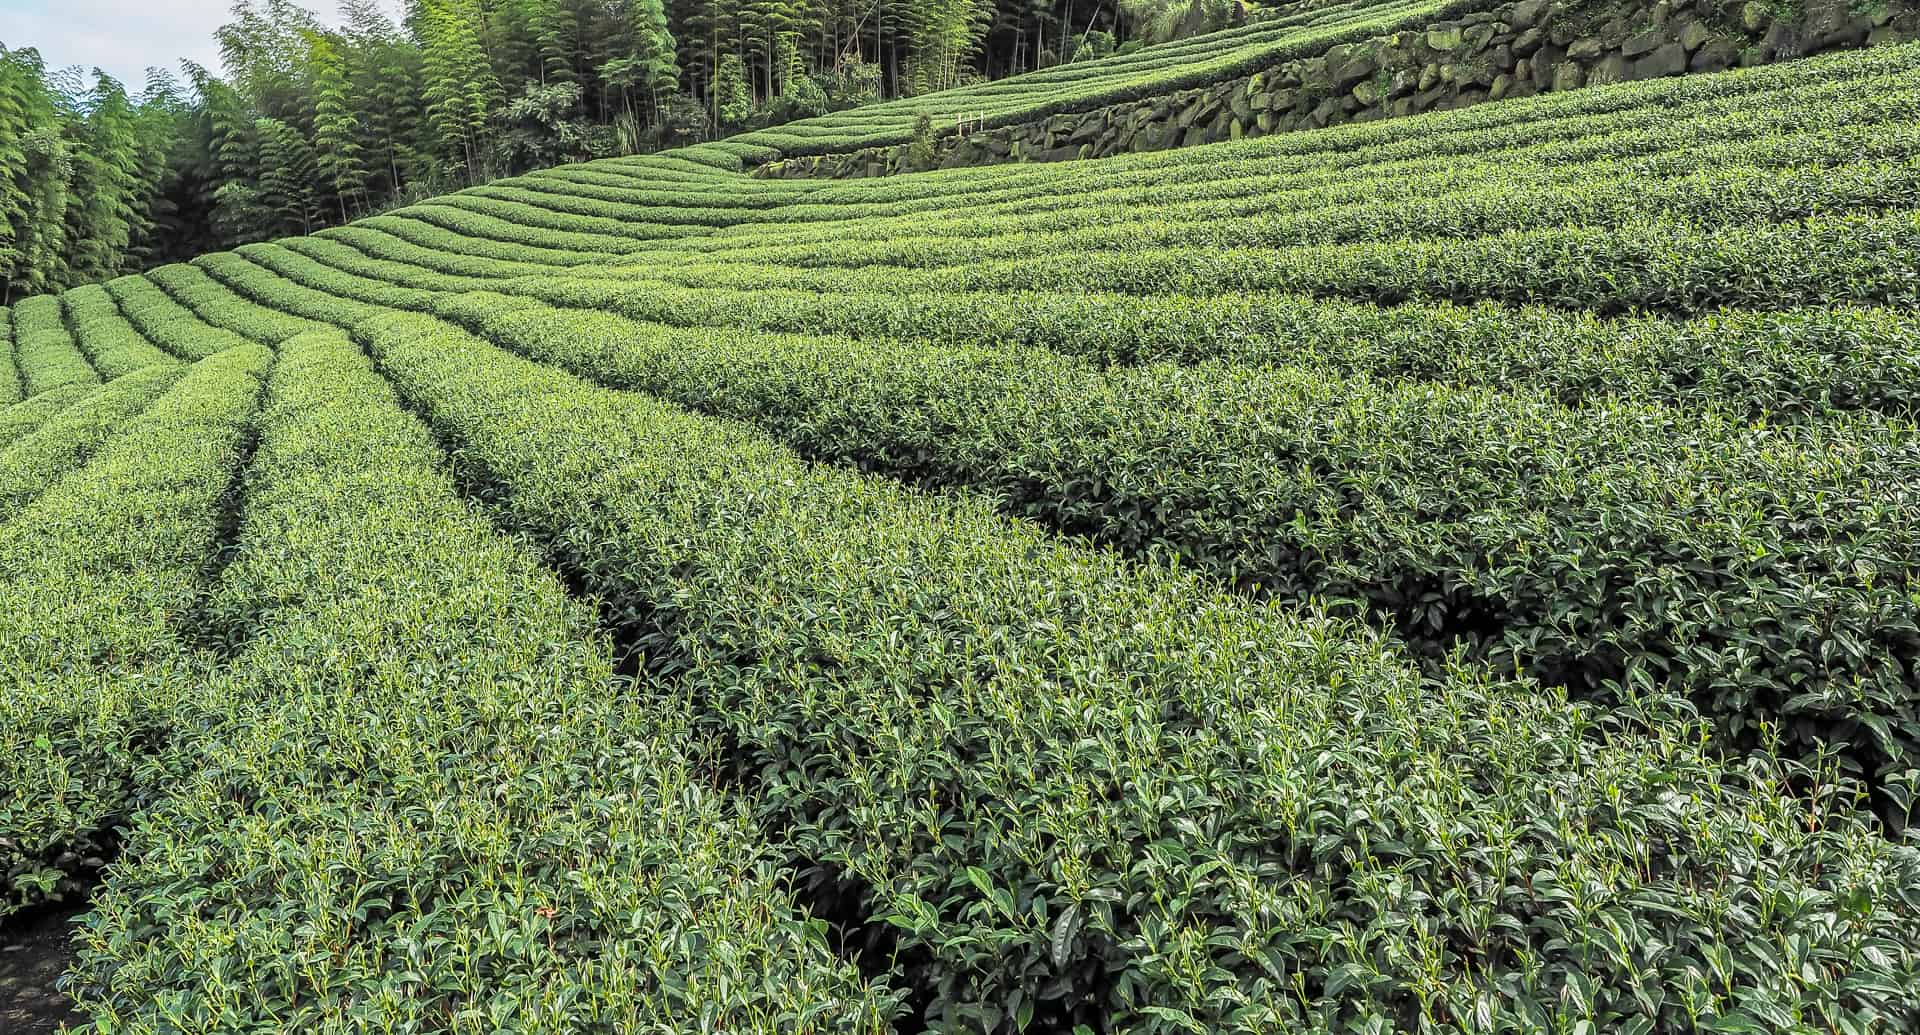 Tea in Taiwan: the best of Taiwanese tea